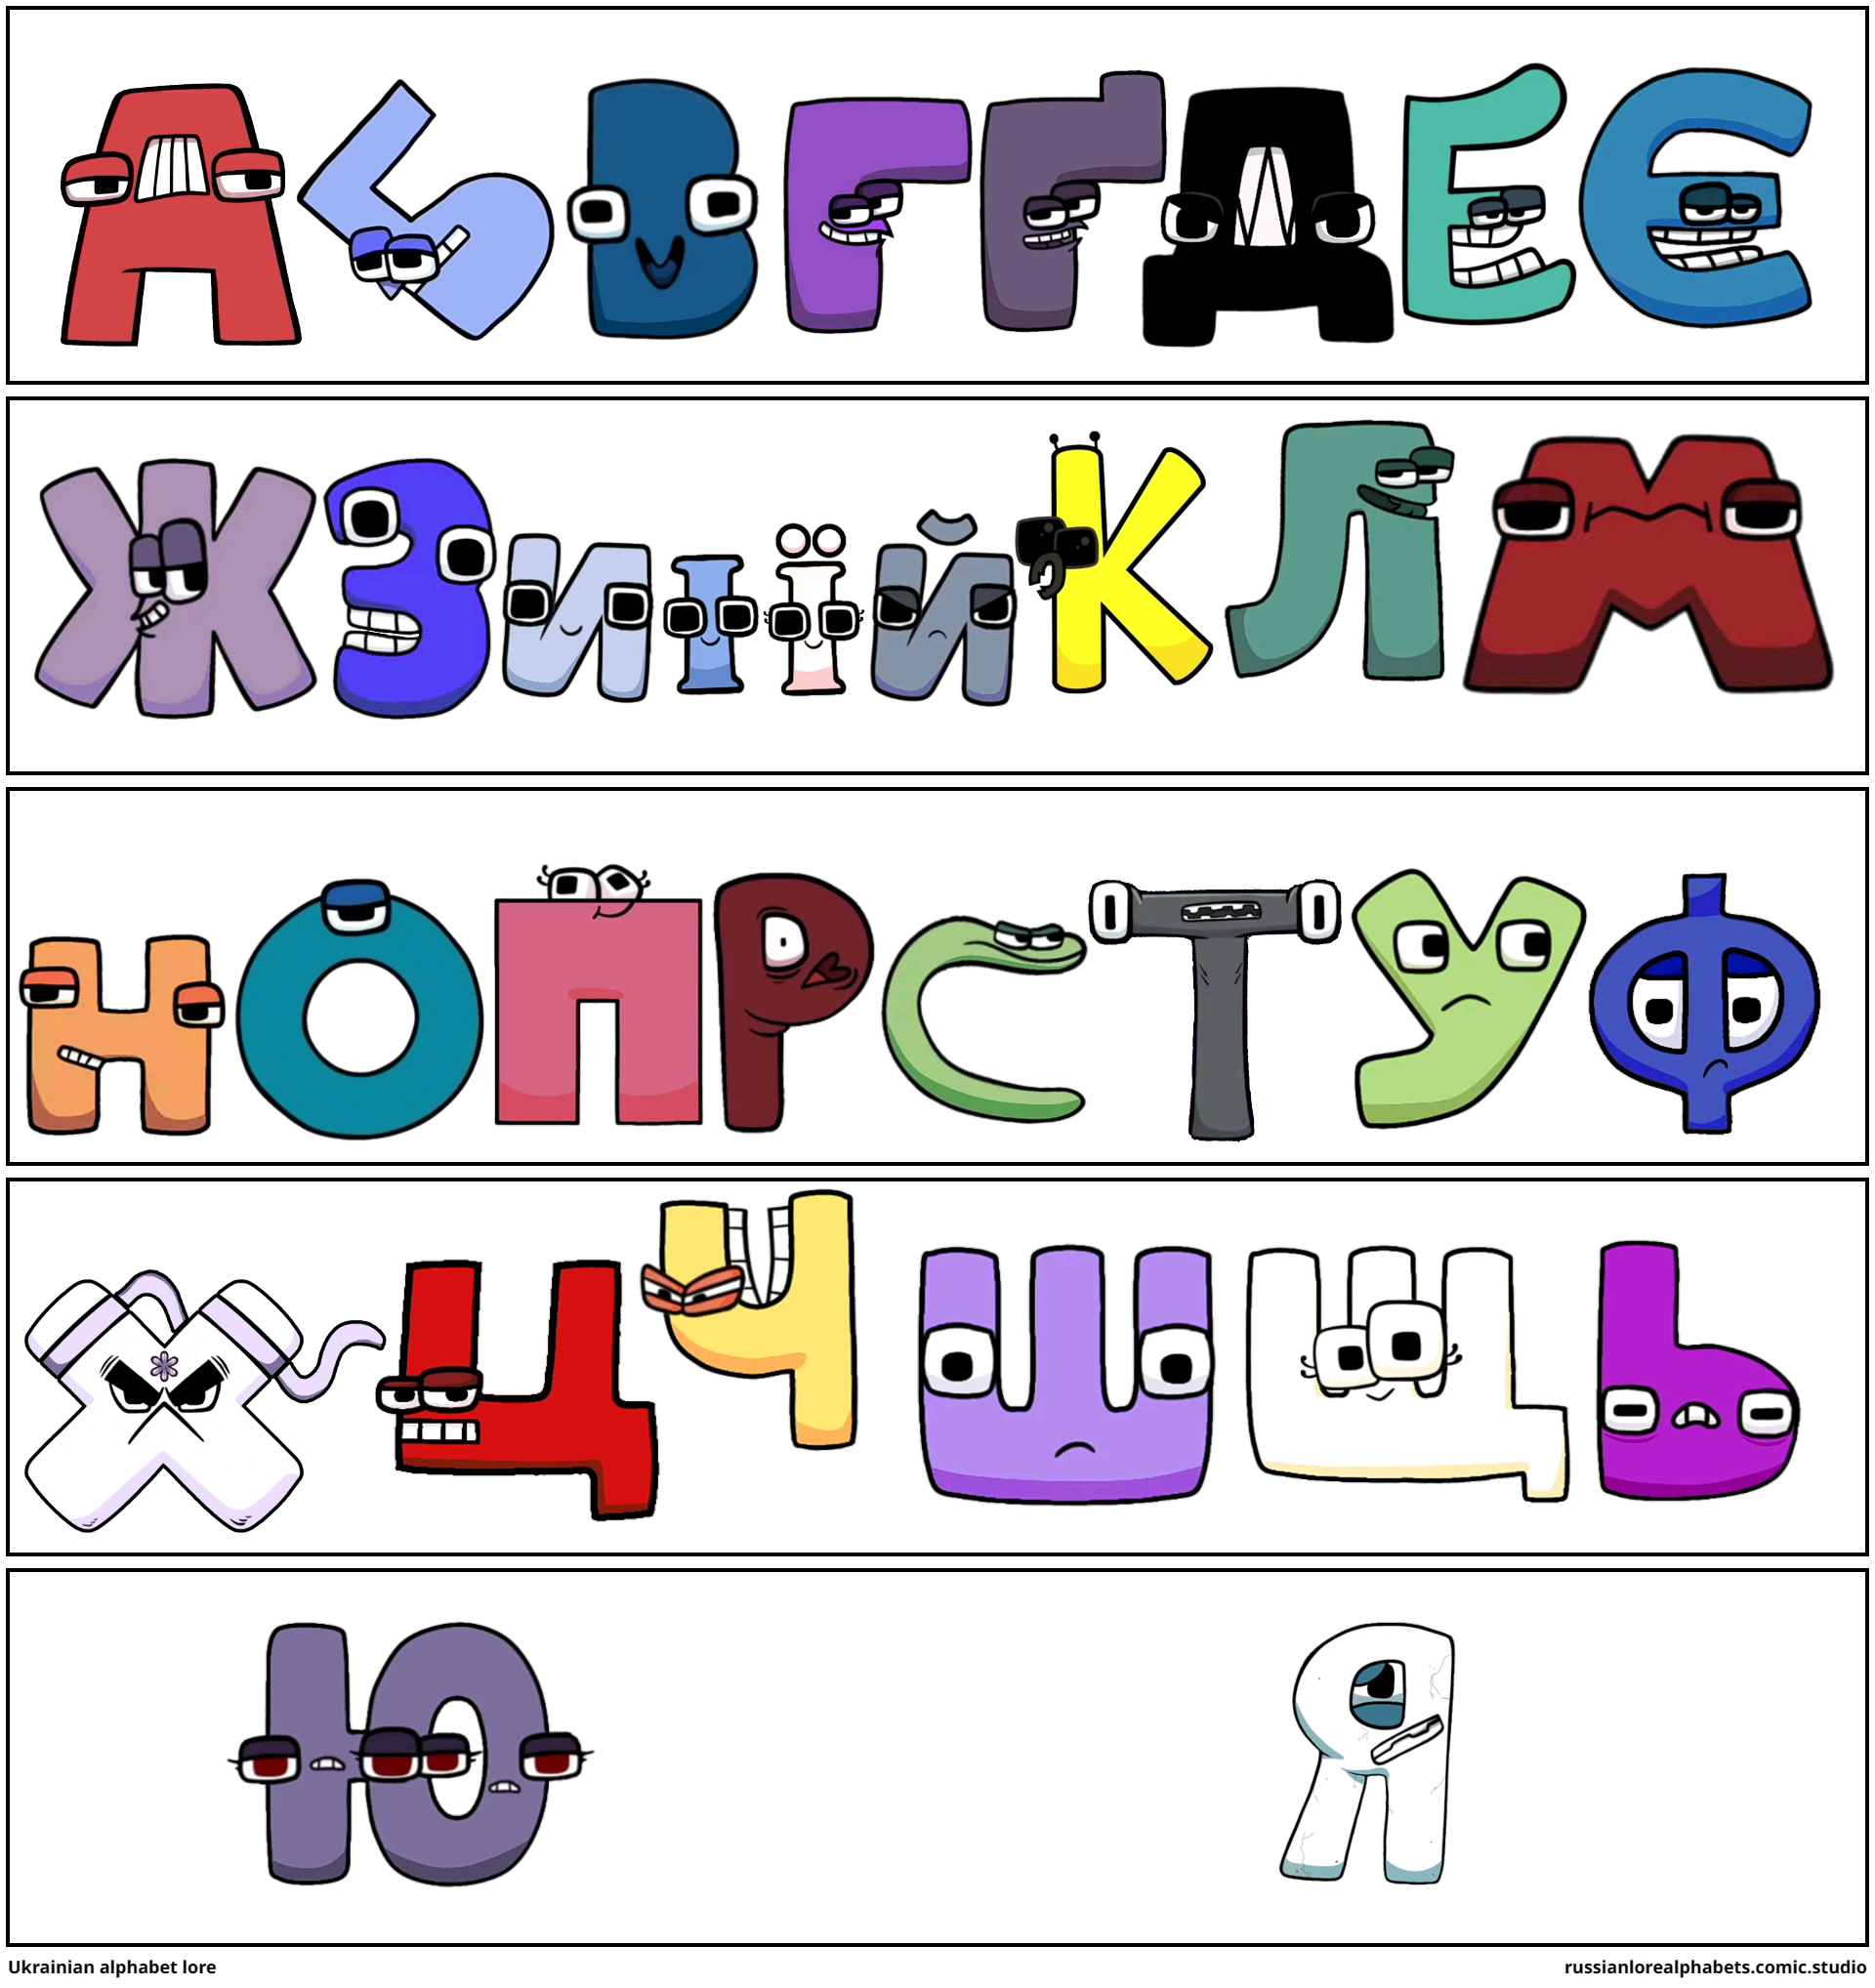 Ukrainian Alphabet Lore 